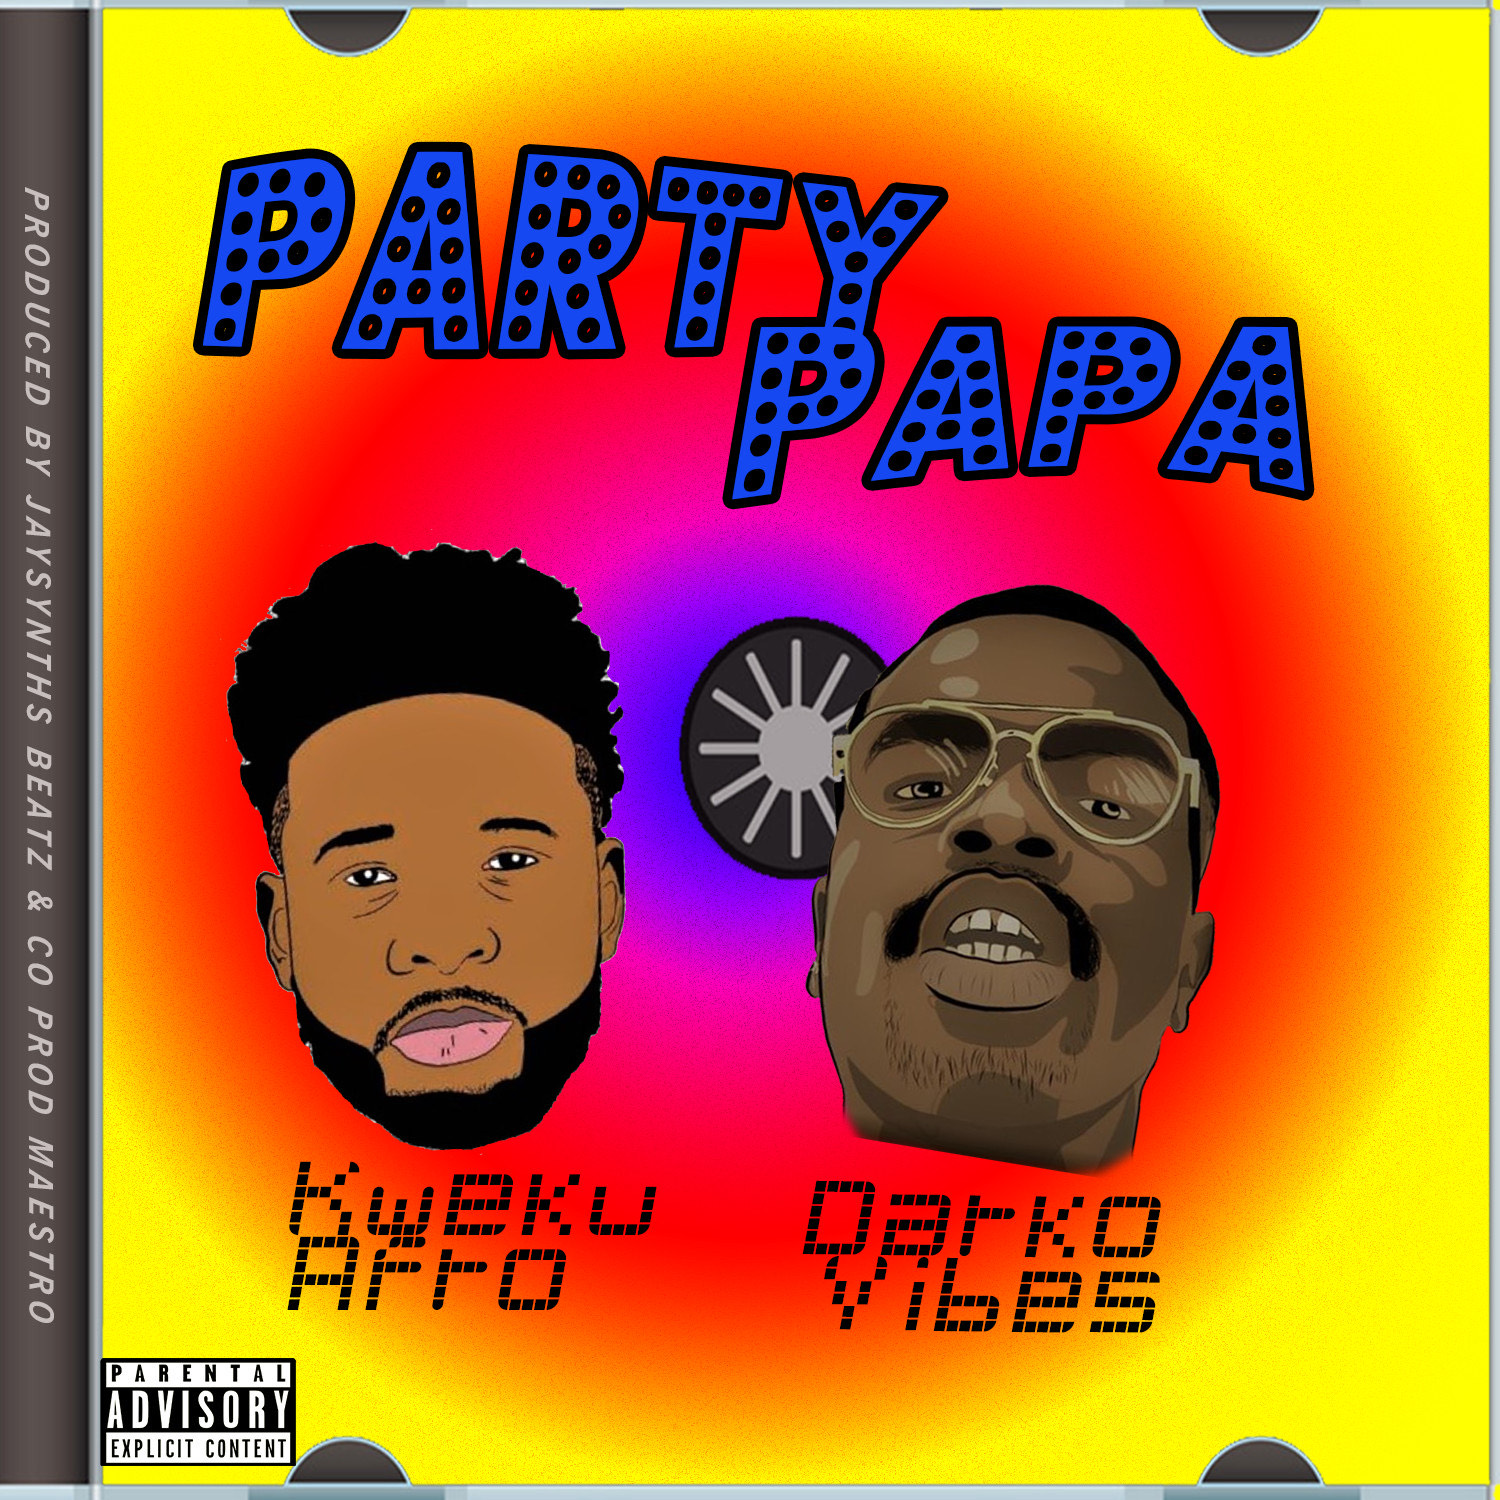 Kweku Afro drops new super funky piece featuring Darkovibes